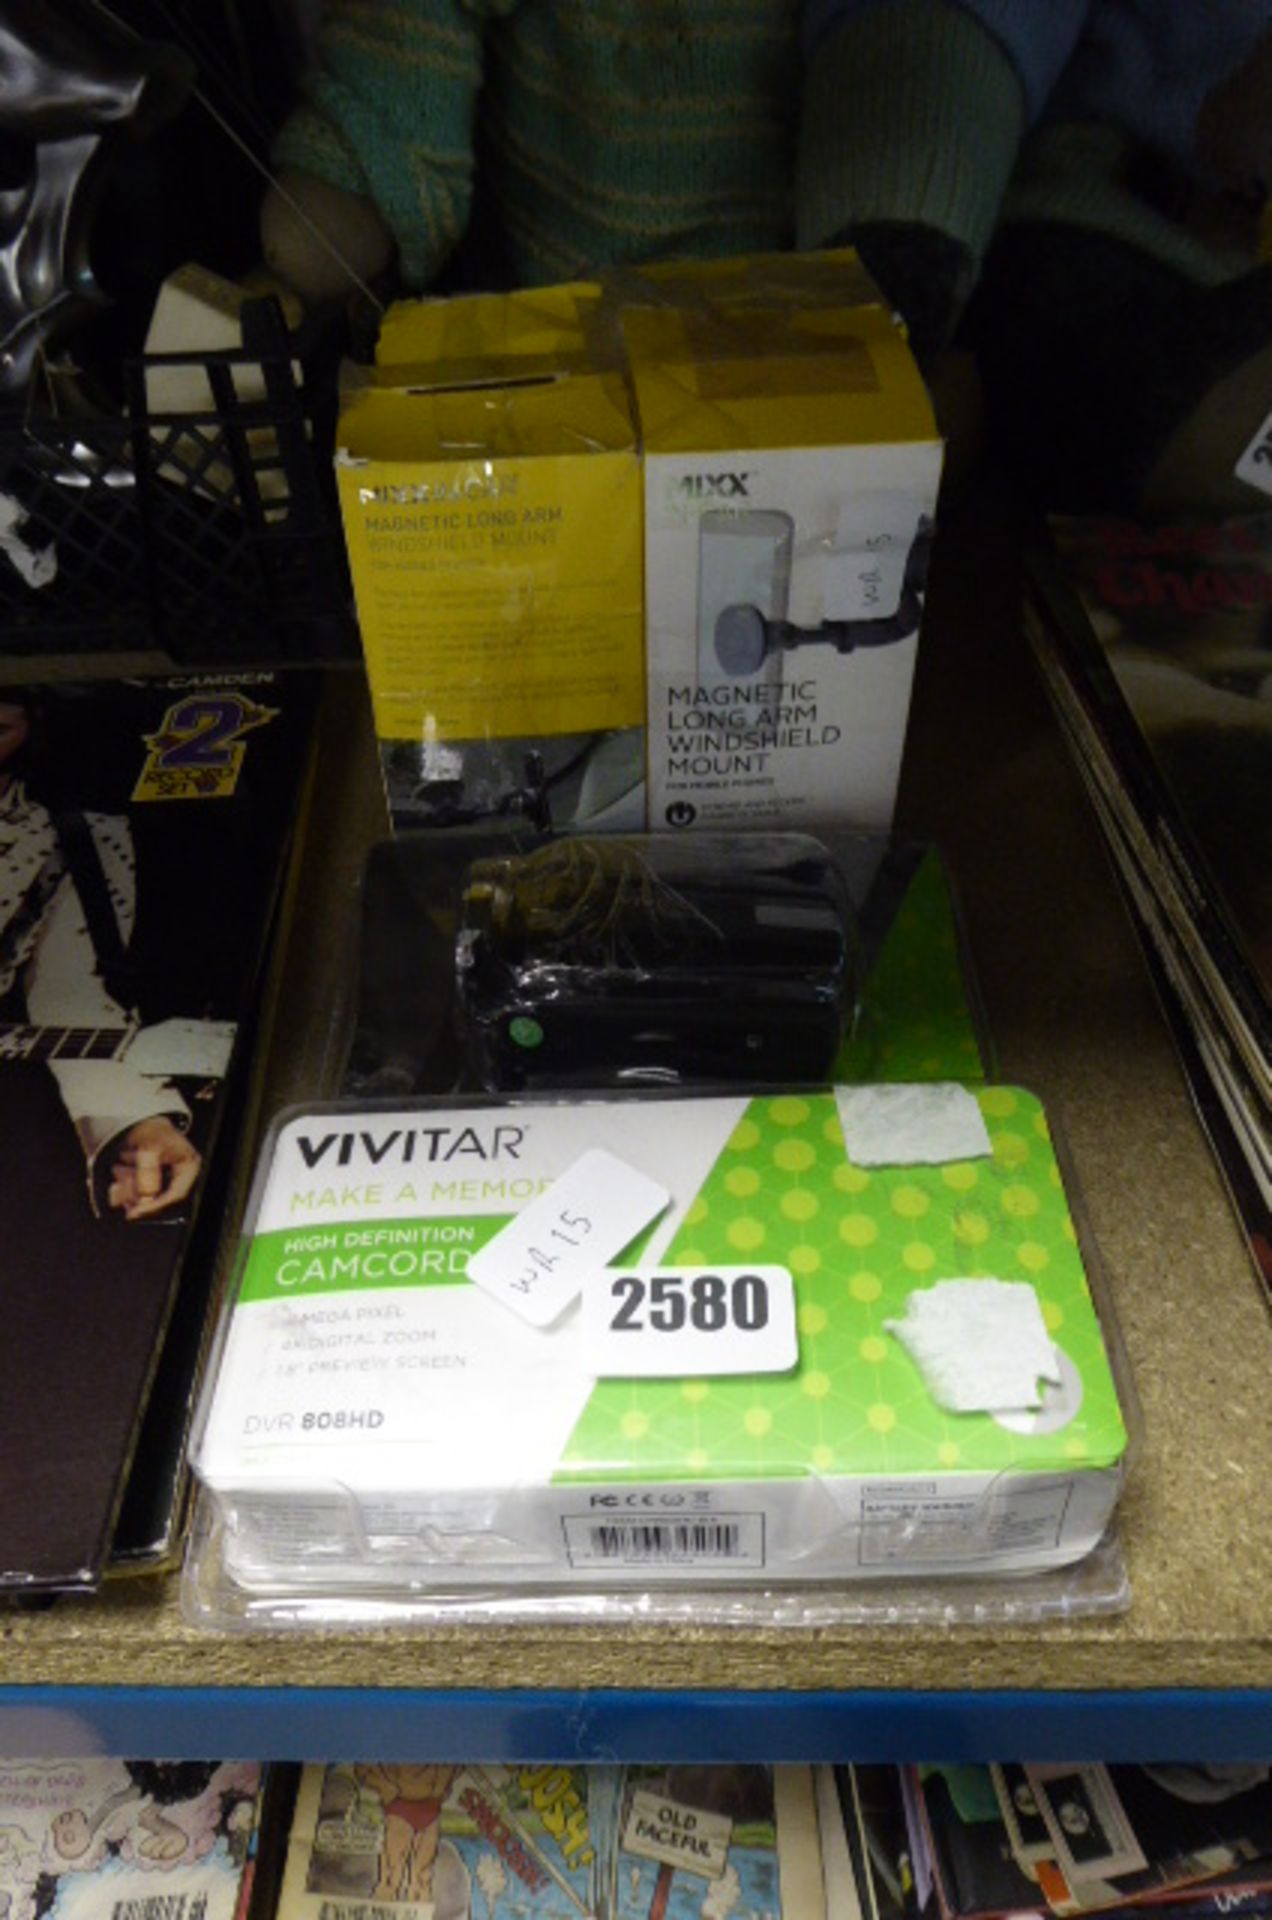 Long arm magnetic windshield mounts and Vivitar digital camera